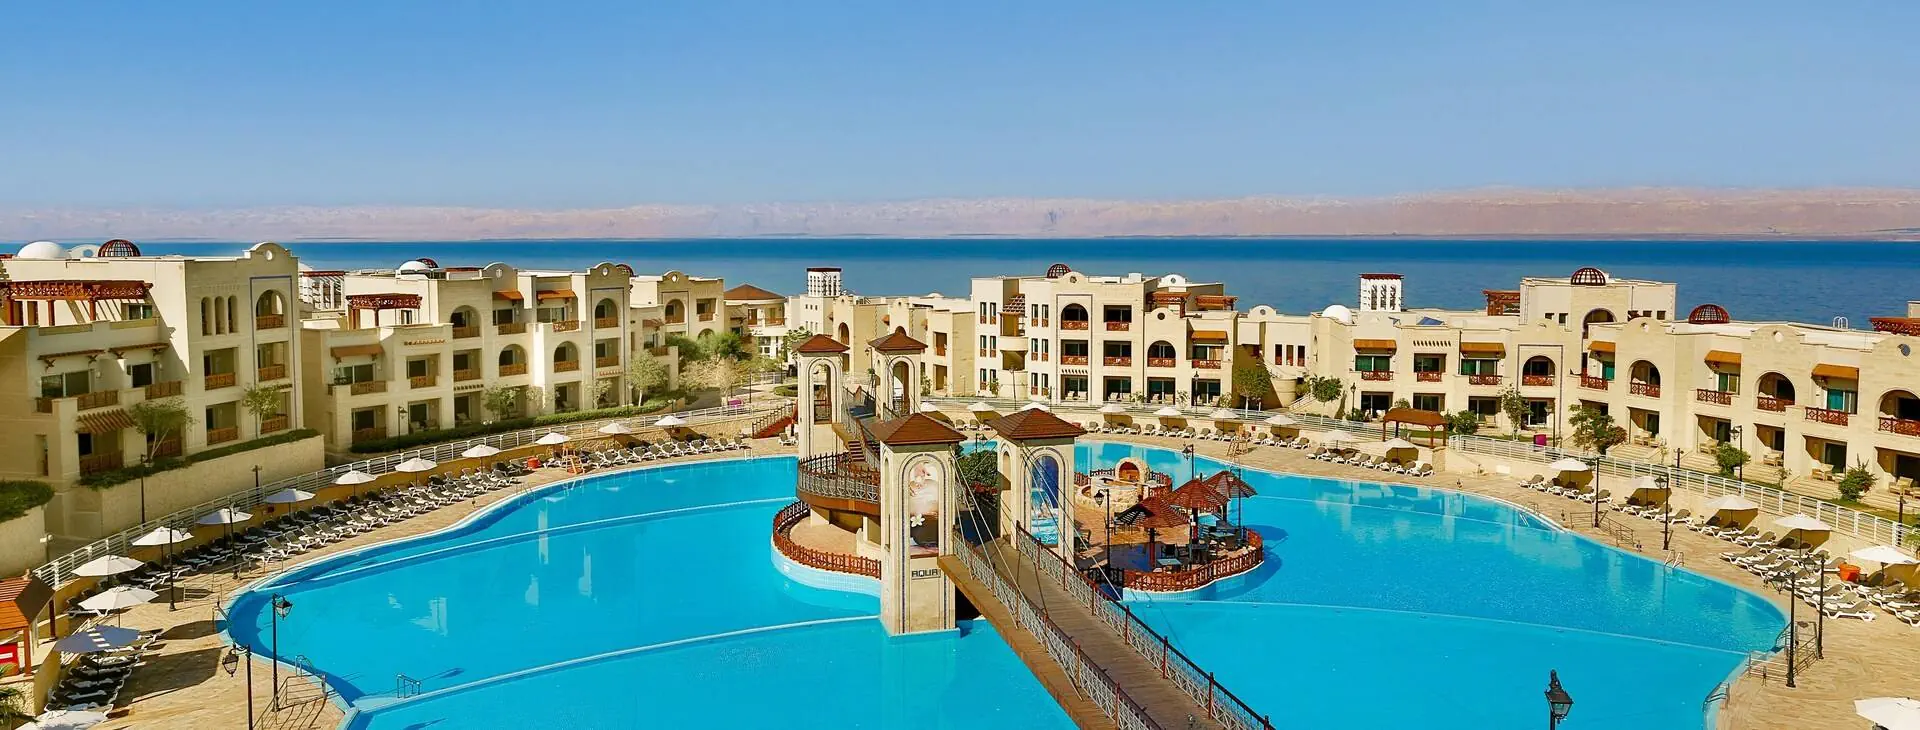 Jordania Al Karak  Sowayma Crowne Plaza Dead Sea